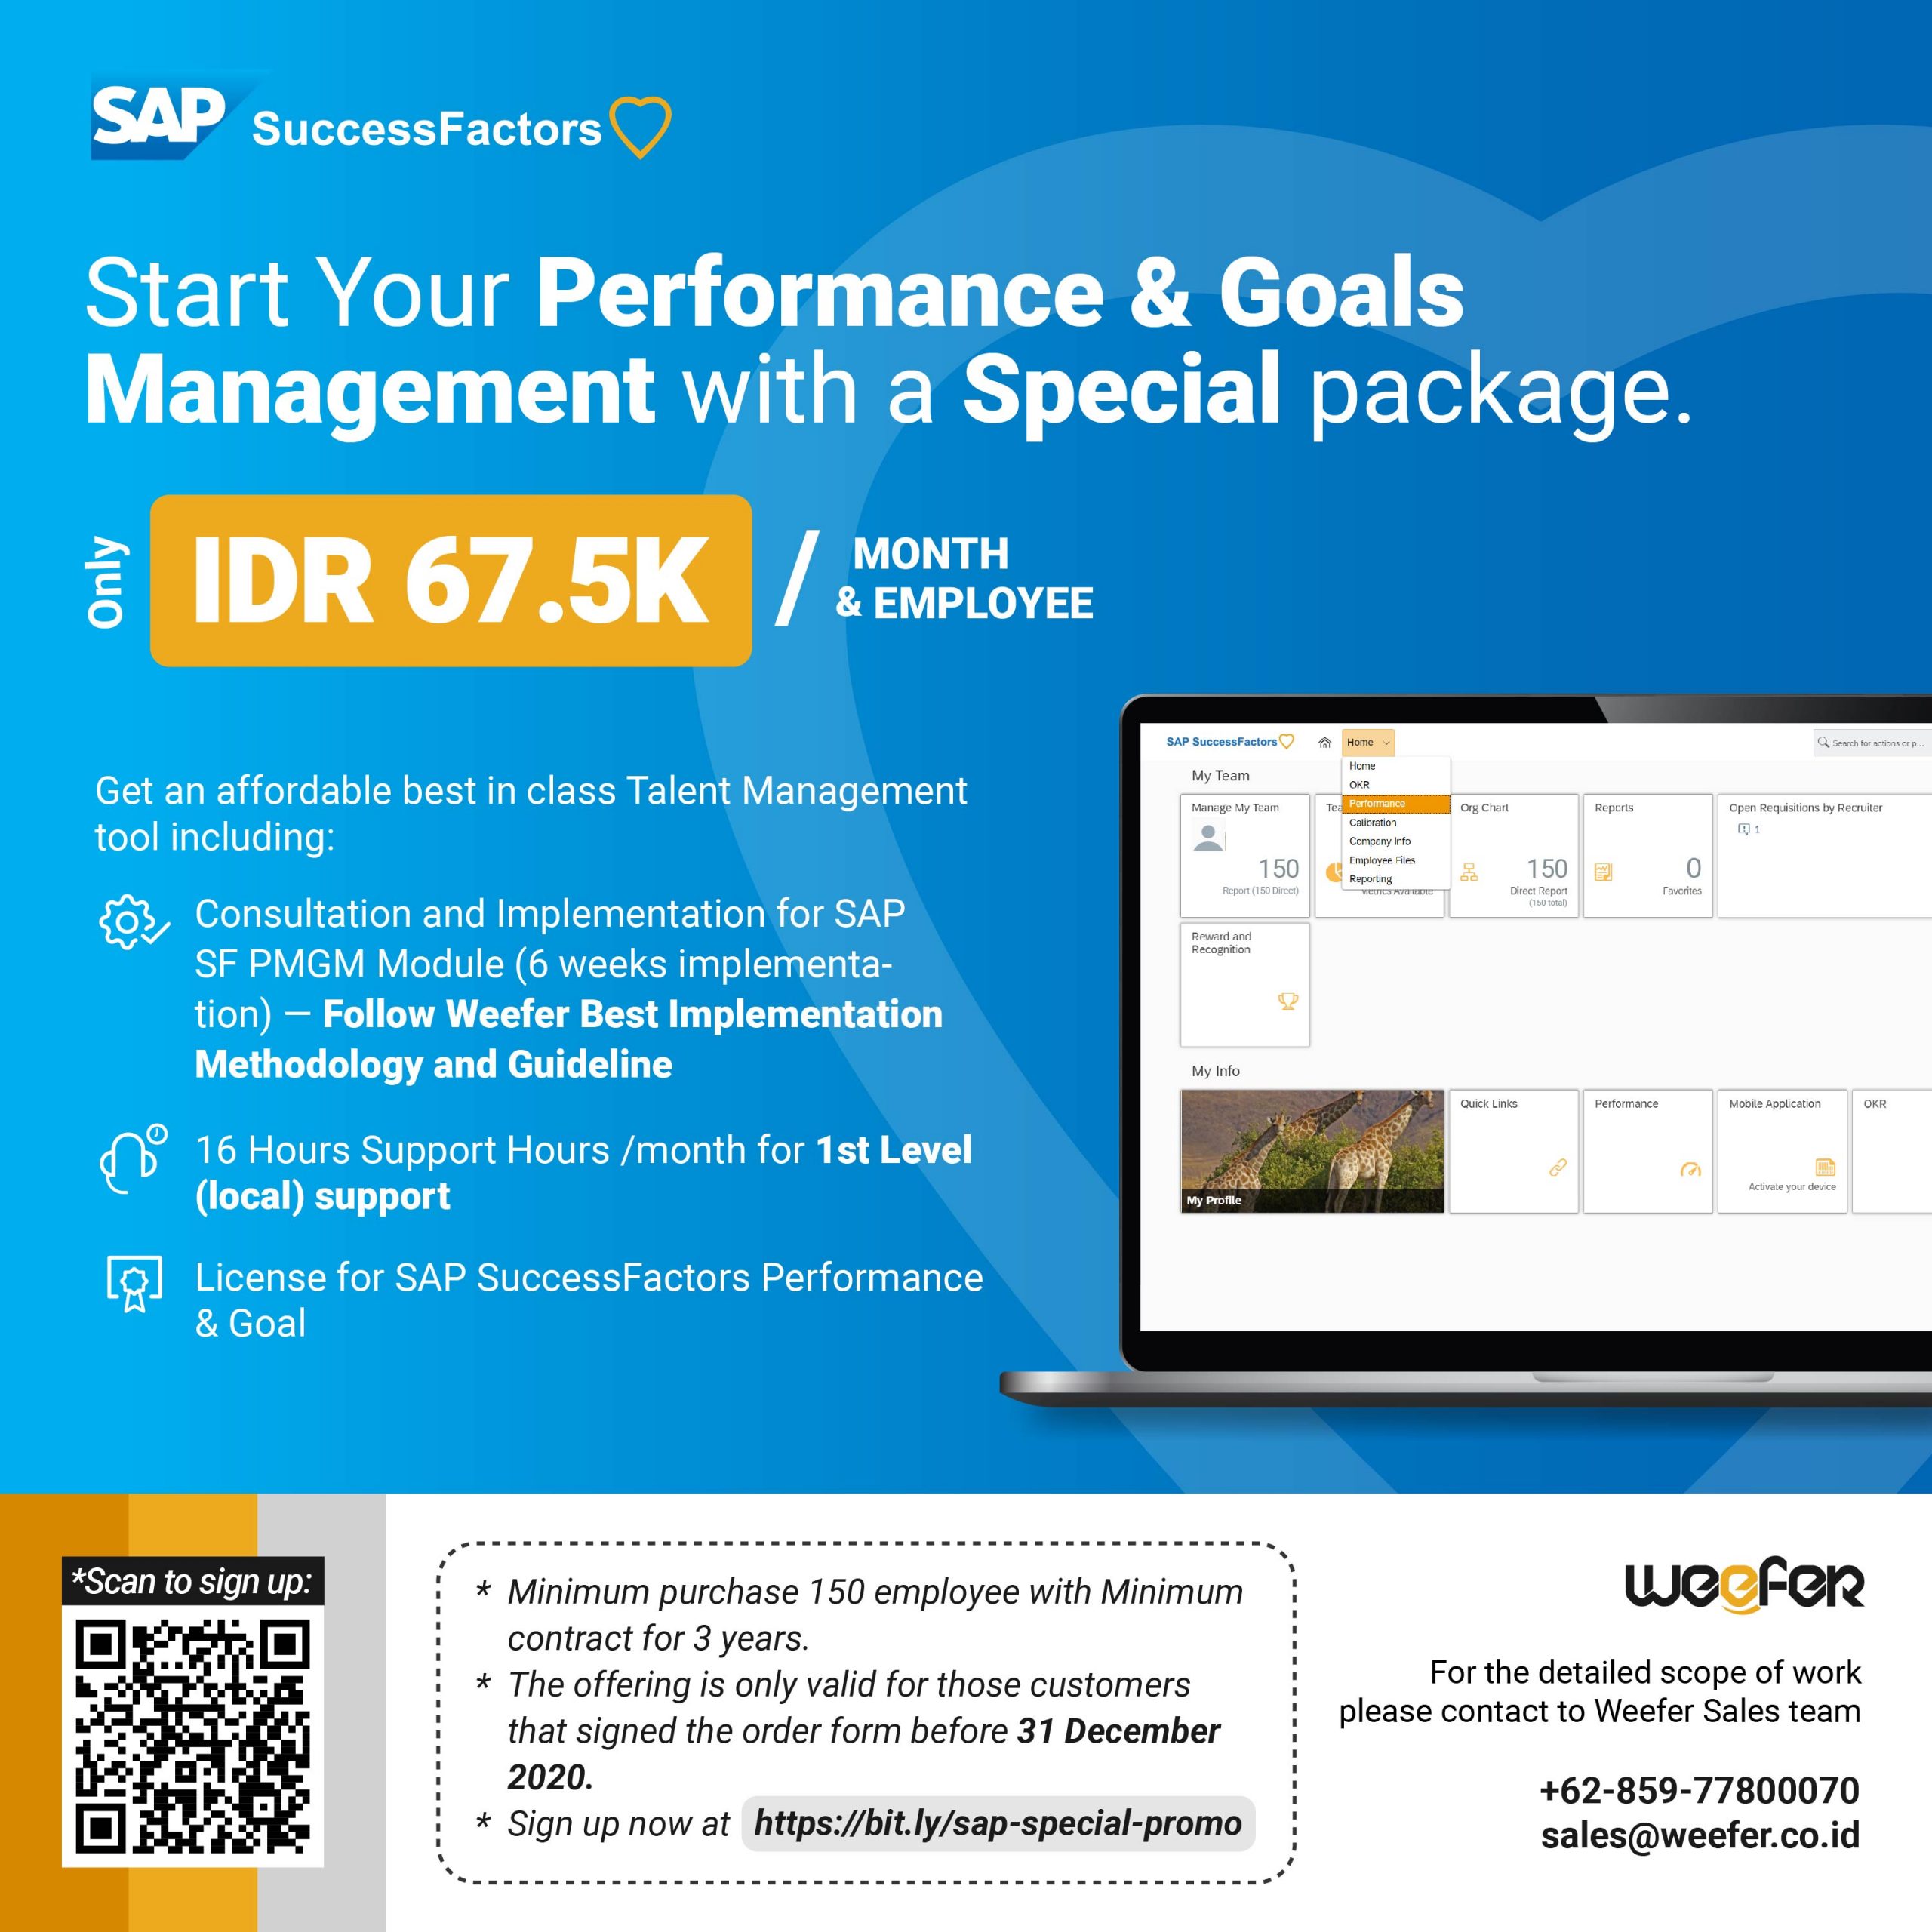 Paket promo SAP SuccessFactors 2020